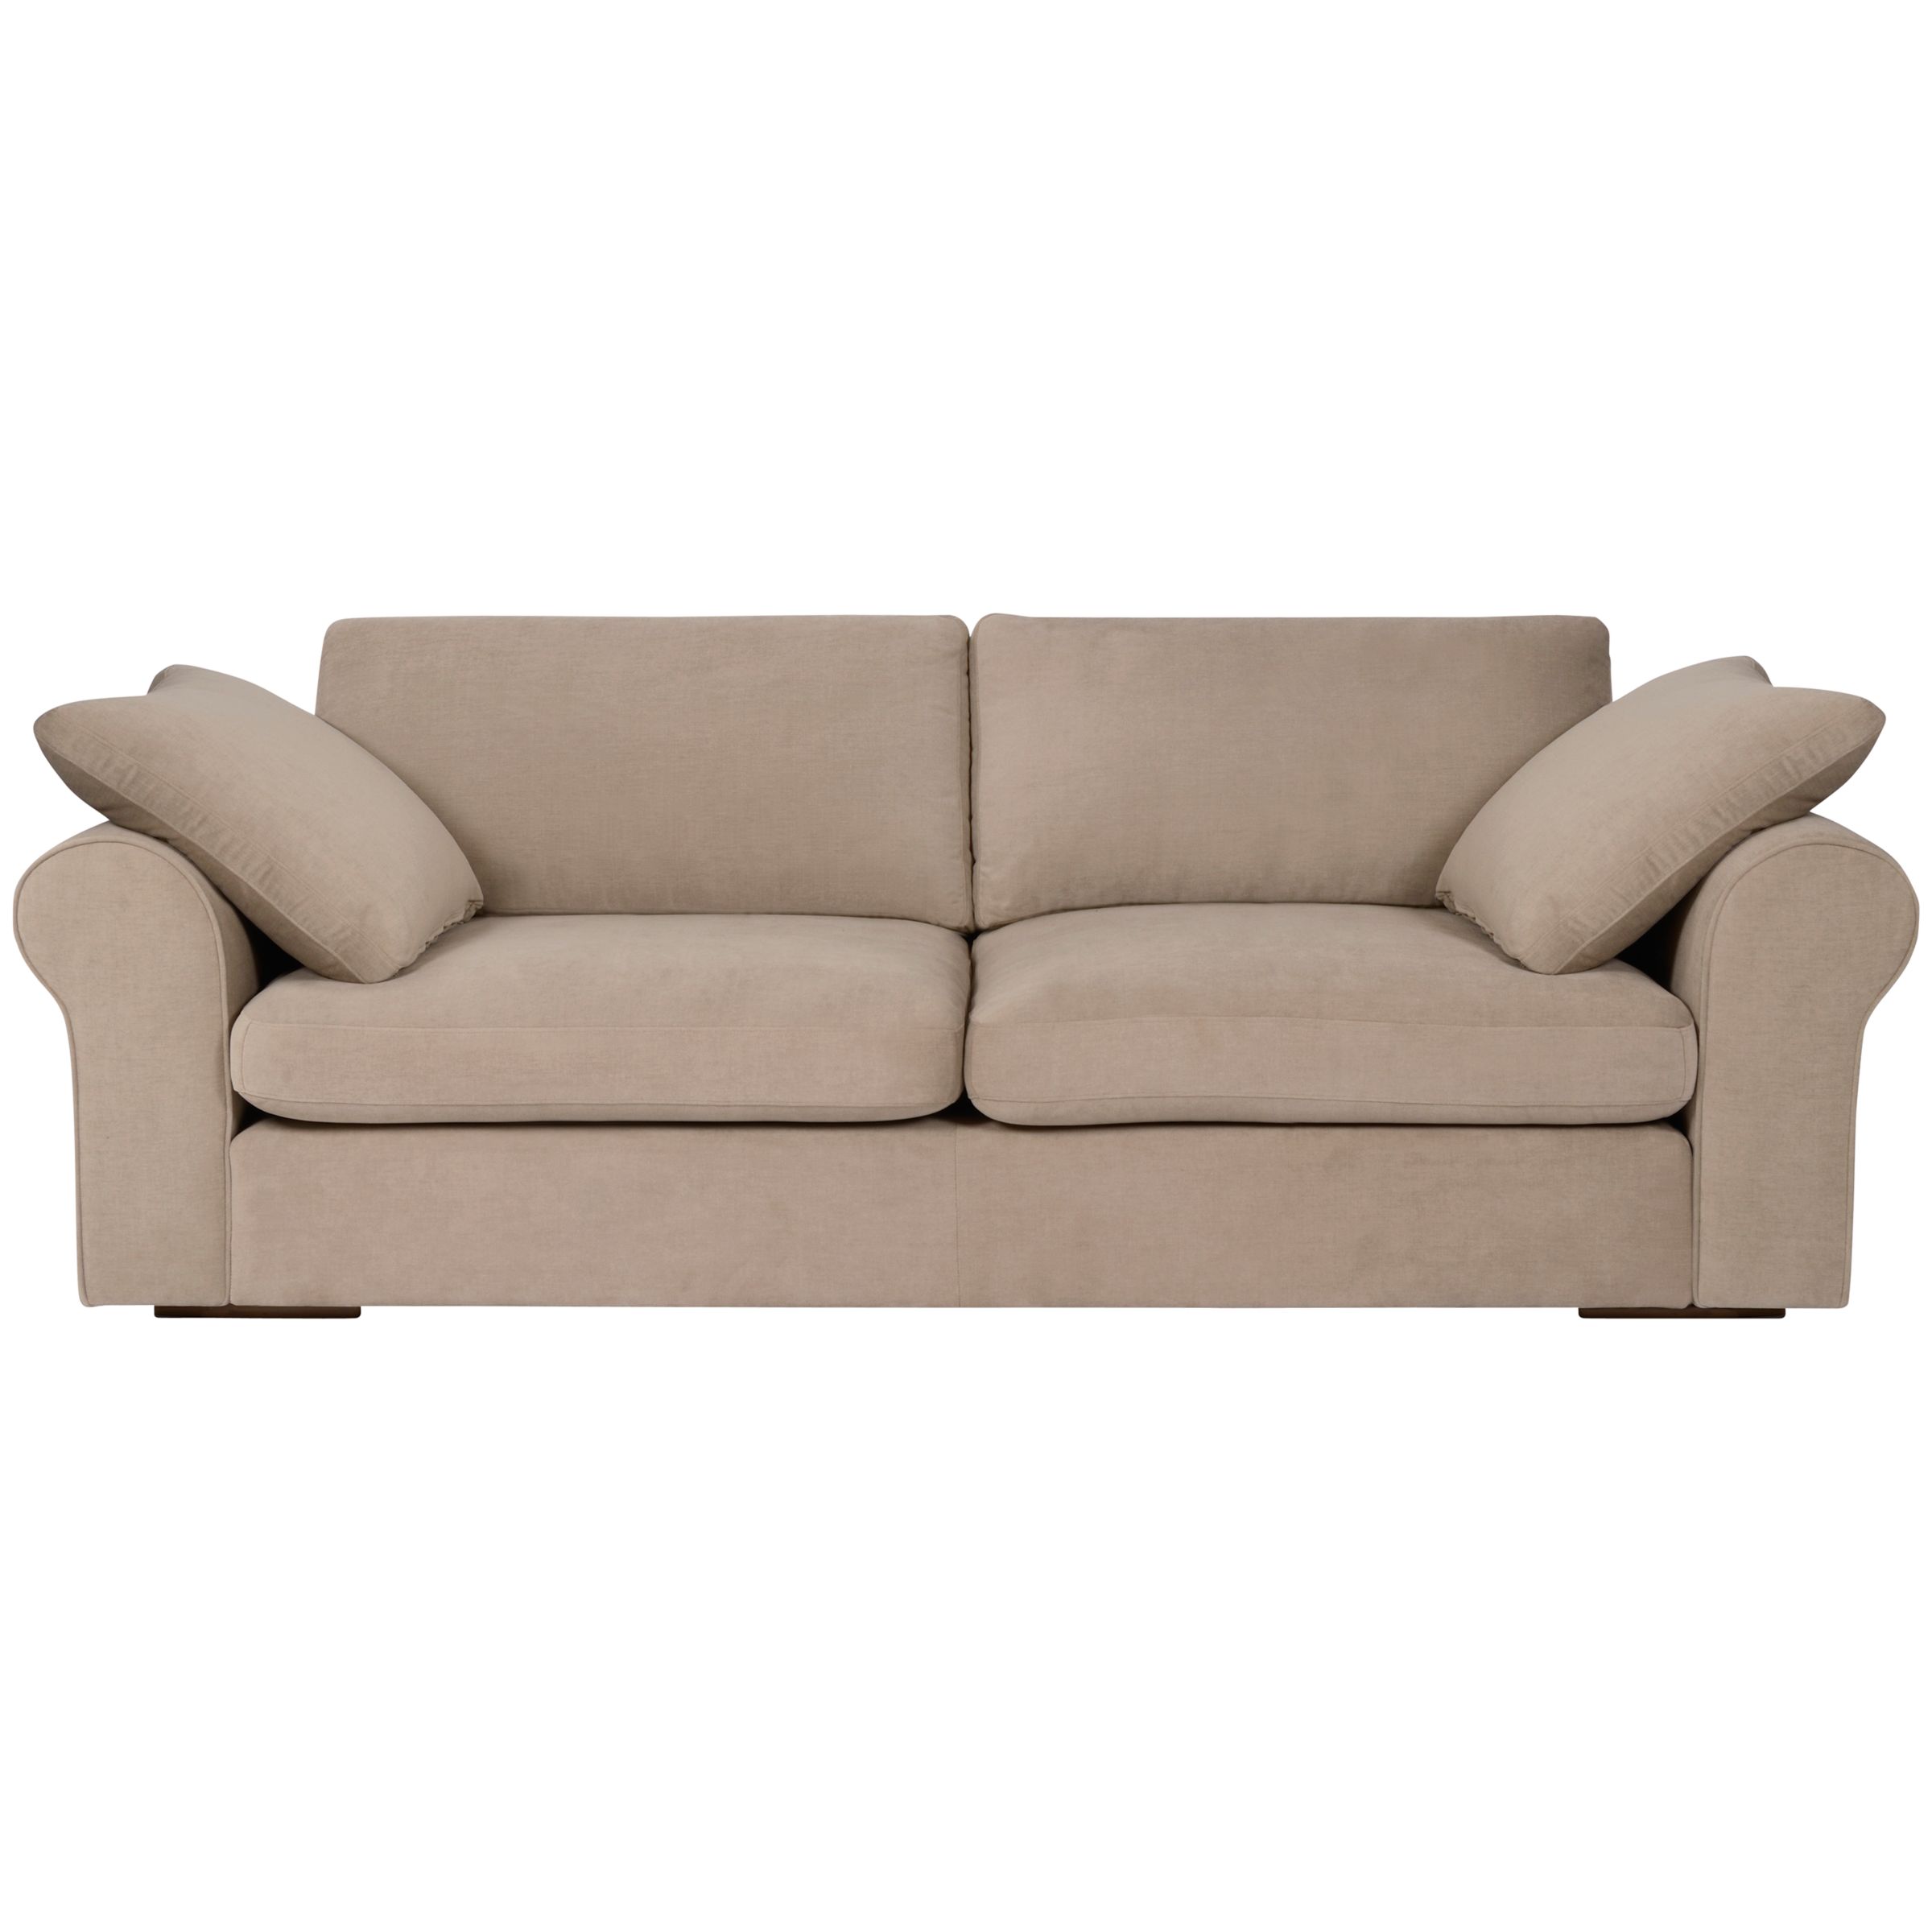 John Lewis Jones Options 2 Scroll Arm Grand Sofa, Oatmeal, width 228cm